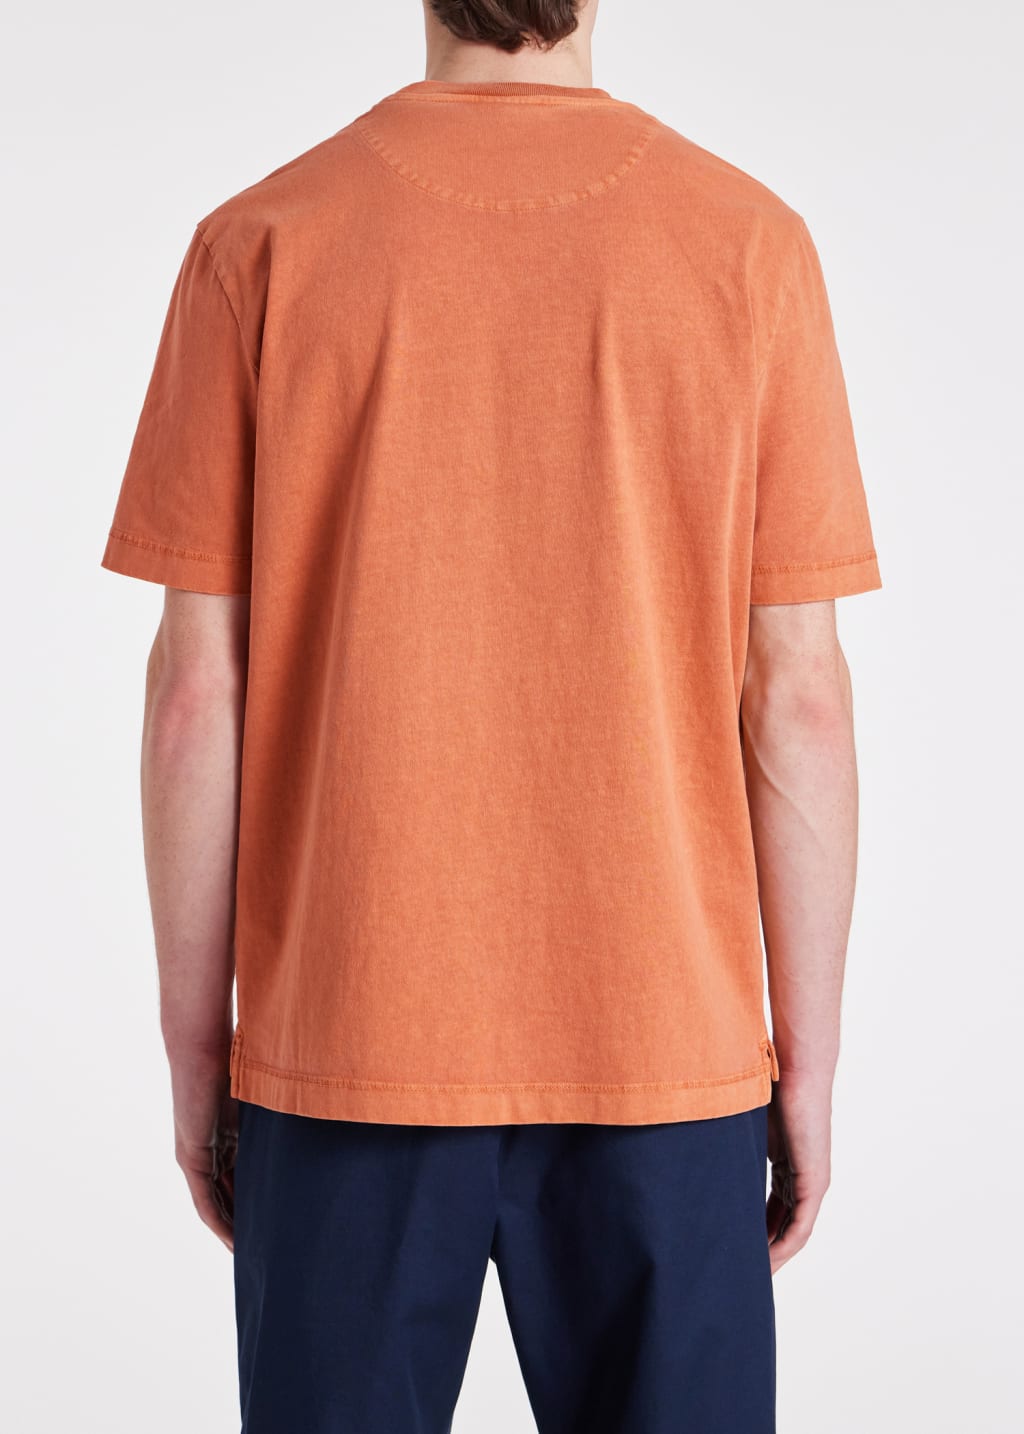 Model View - Burnt Orange Cotton 'Happy' T-Shirt Paul Smith